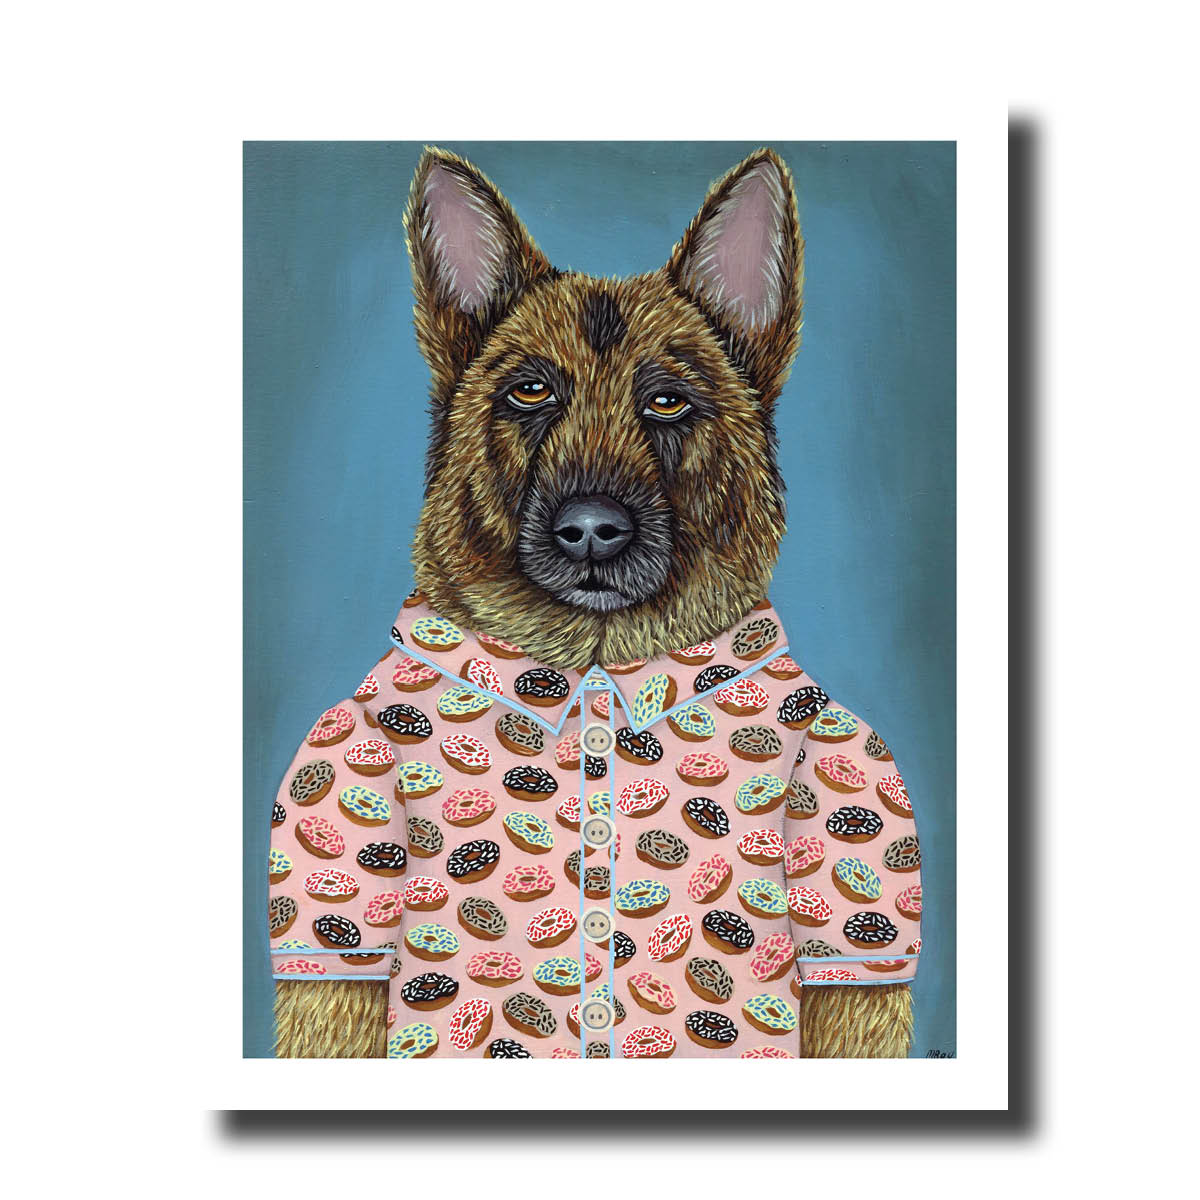 REPRODUCTION-"Sarge's Donut Shirt"